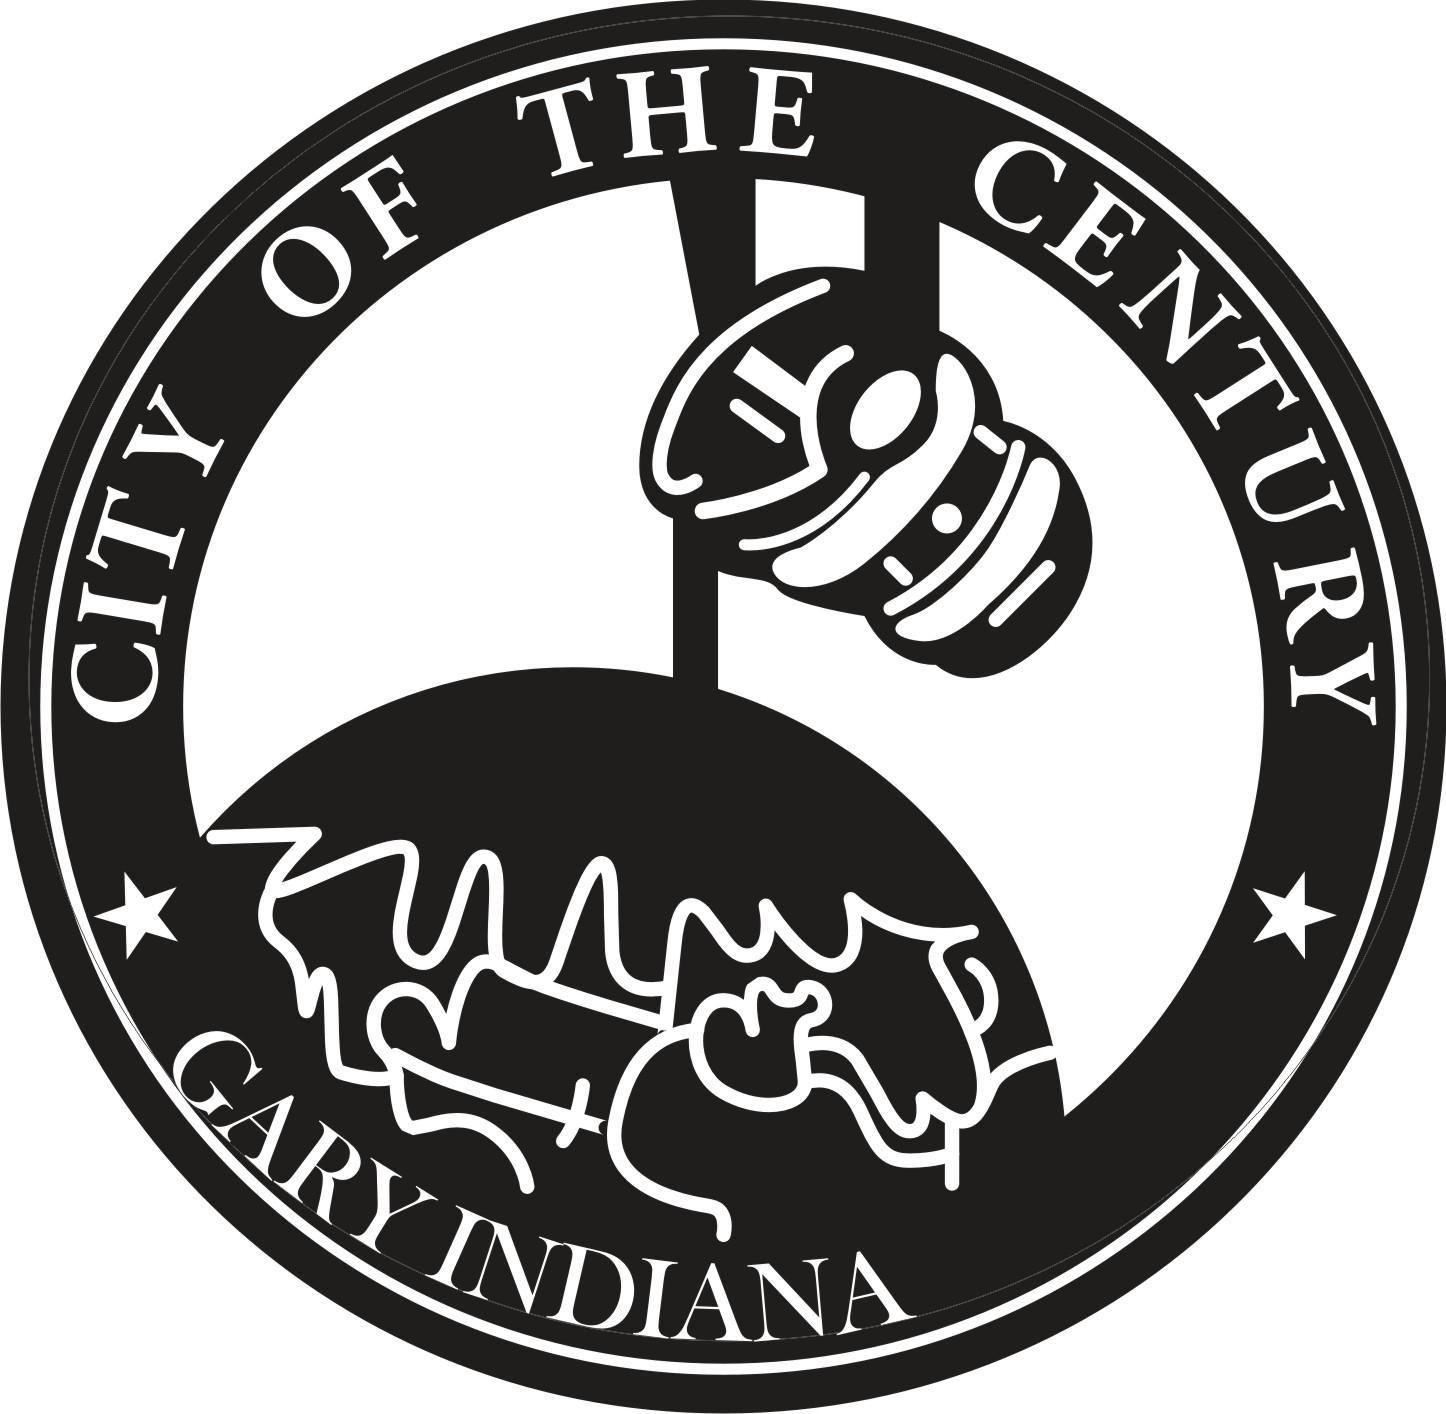 Gary Logo - City of Gary IN logo